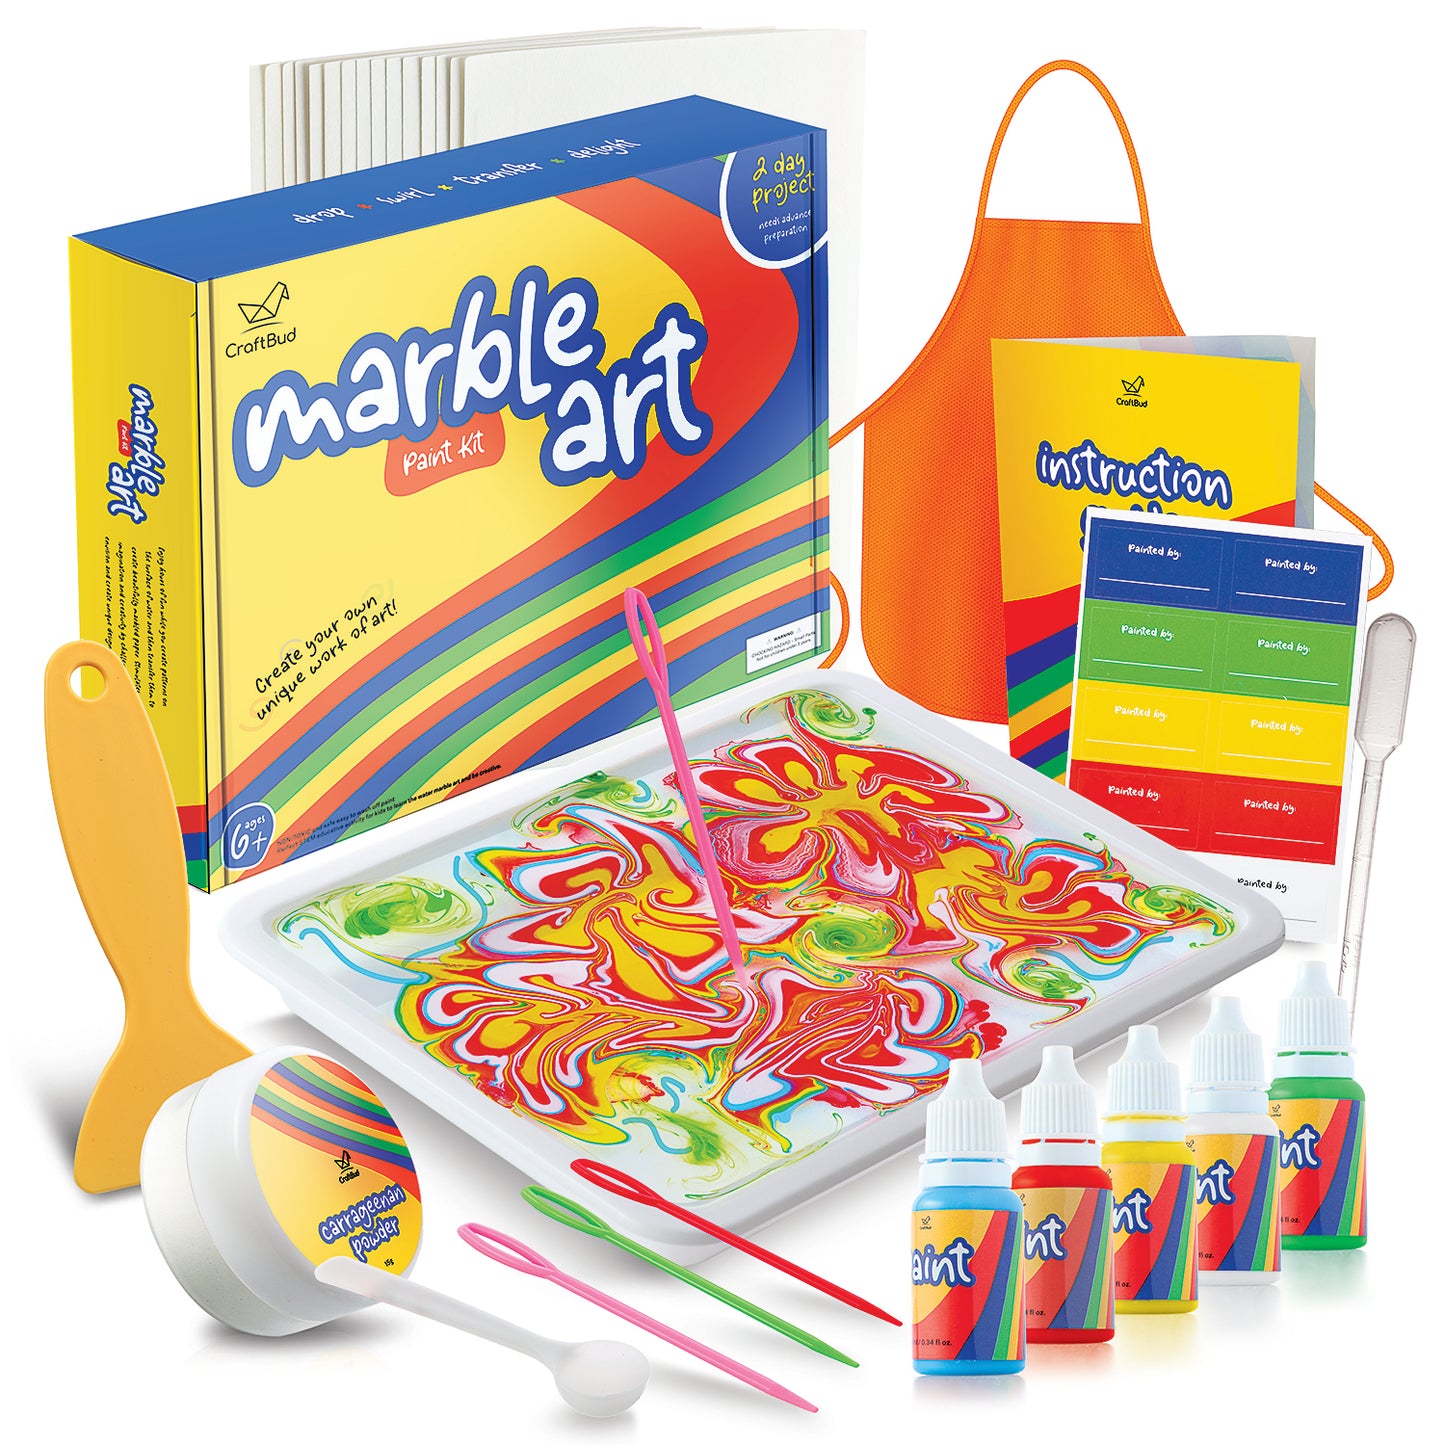 Marbling Paint Art Kit for Kids - Arts and Crafts El Salvador